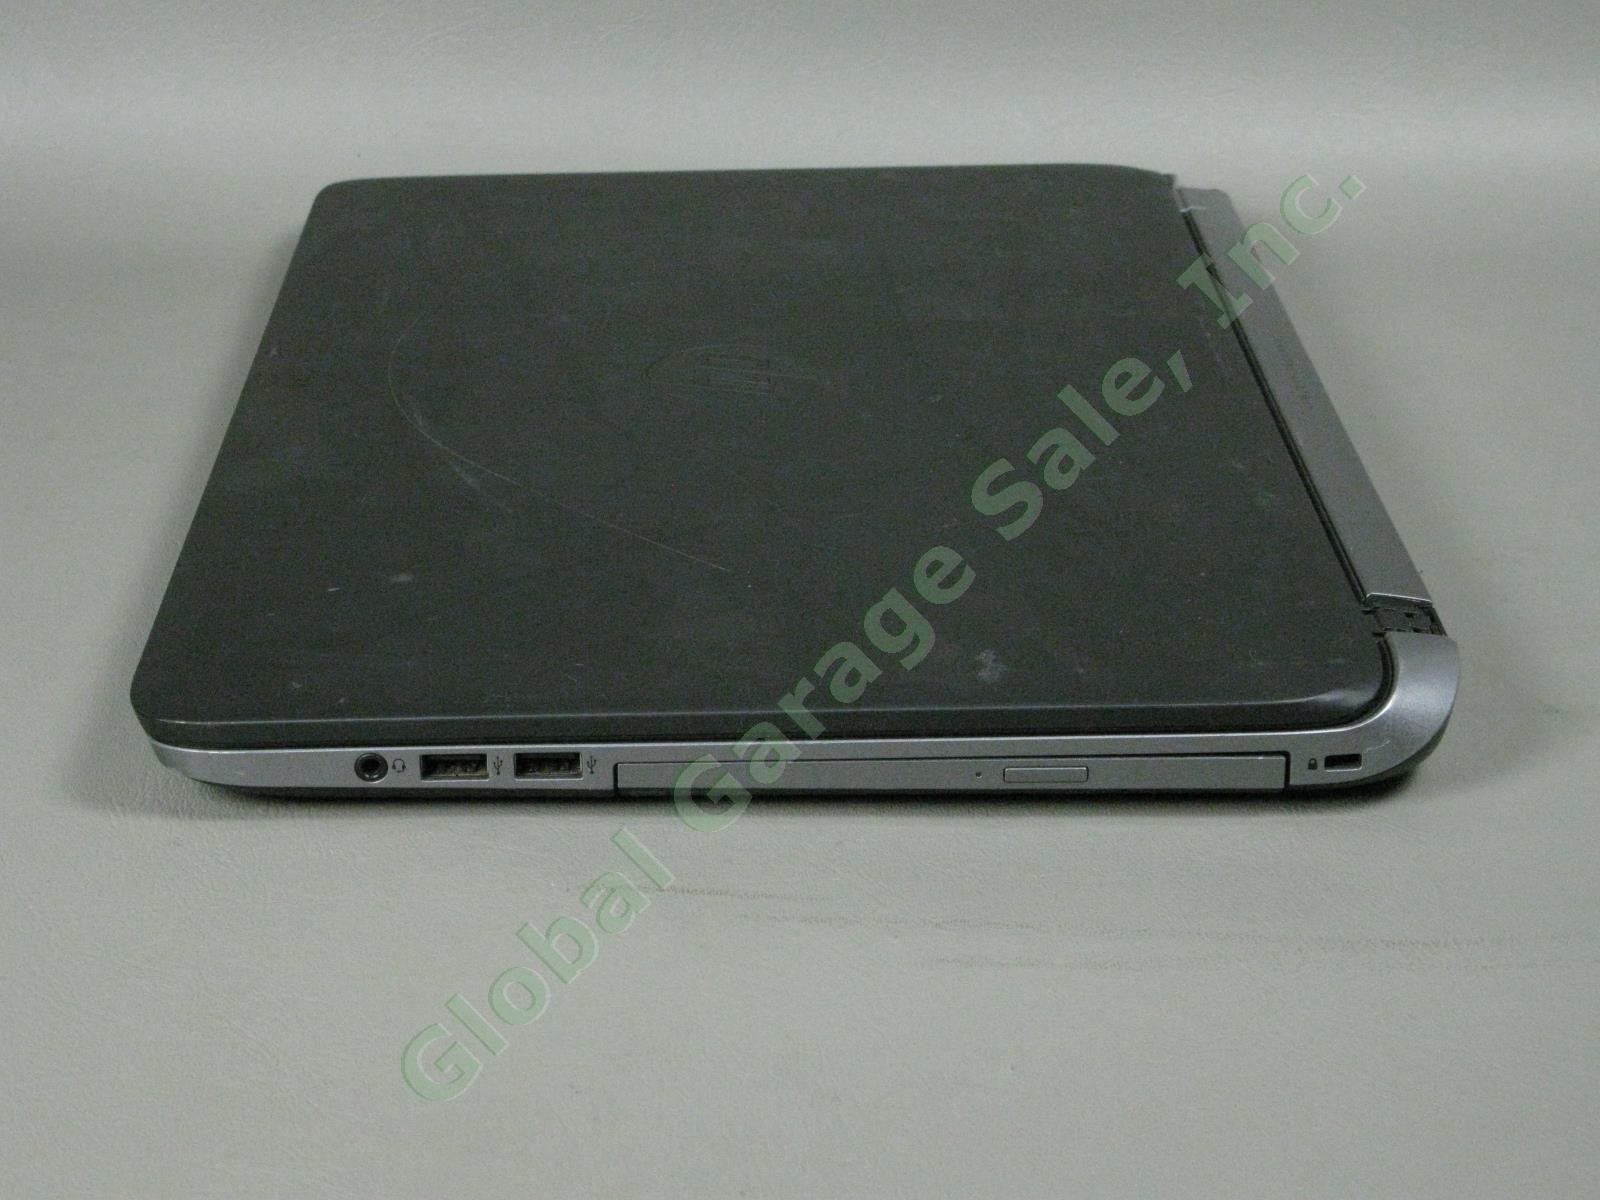 HP ProBook 450 G2 Laptop Computer i5-4210U 2.40GHz 4GB 460GB Win 10 Professional 3